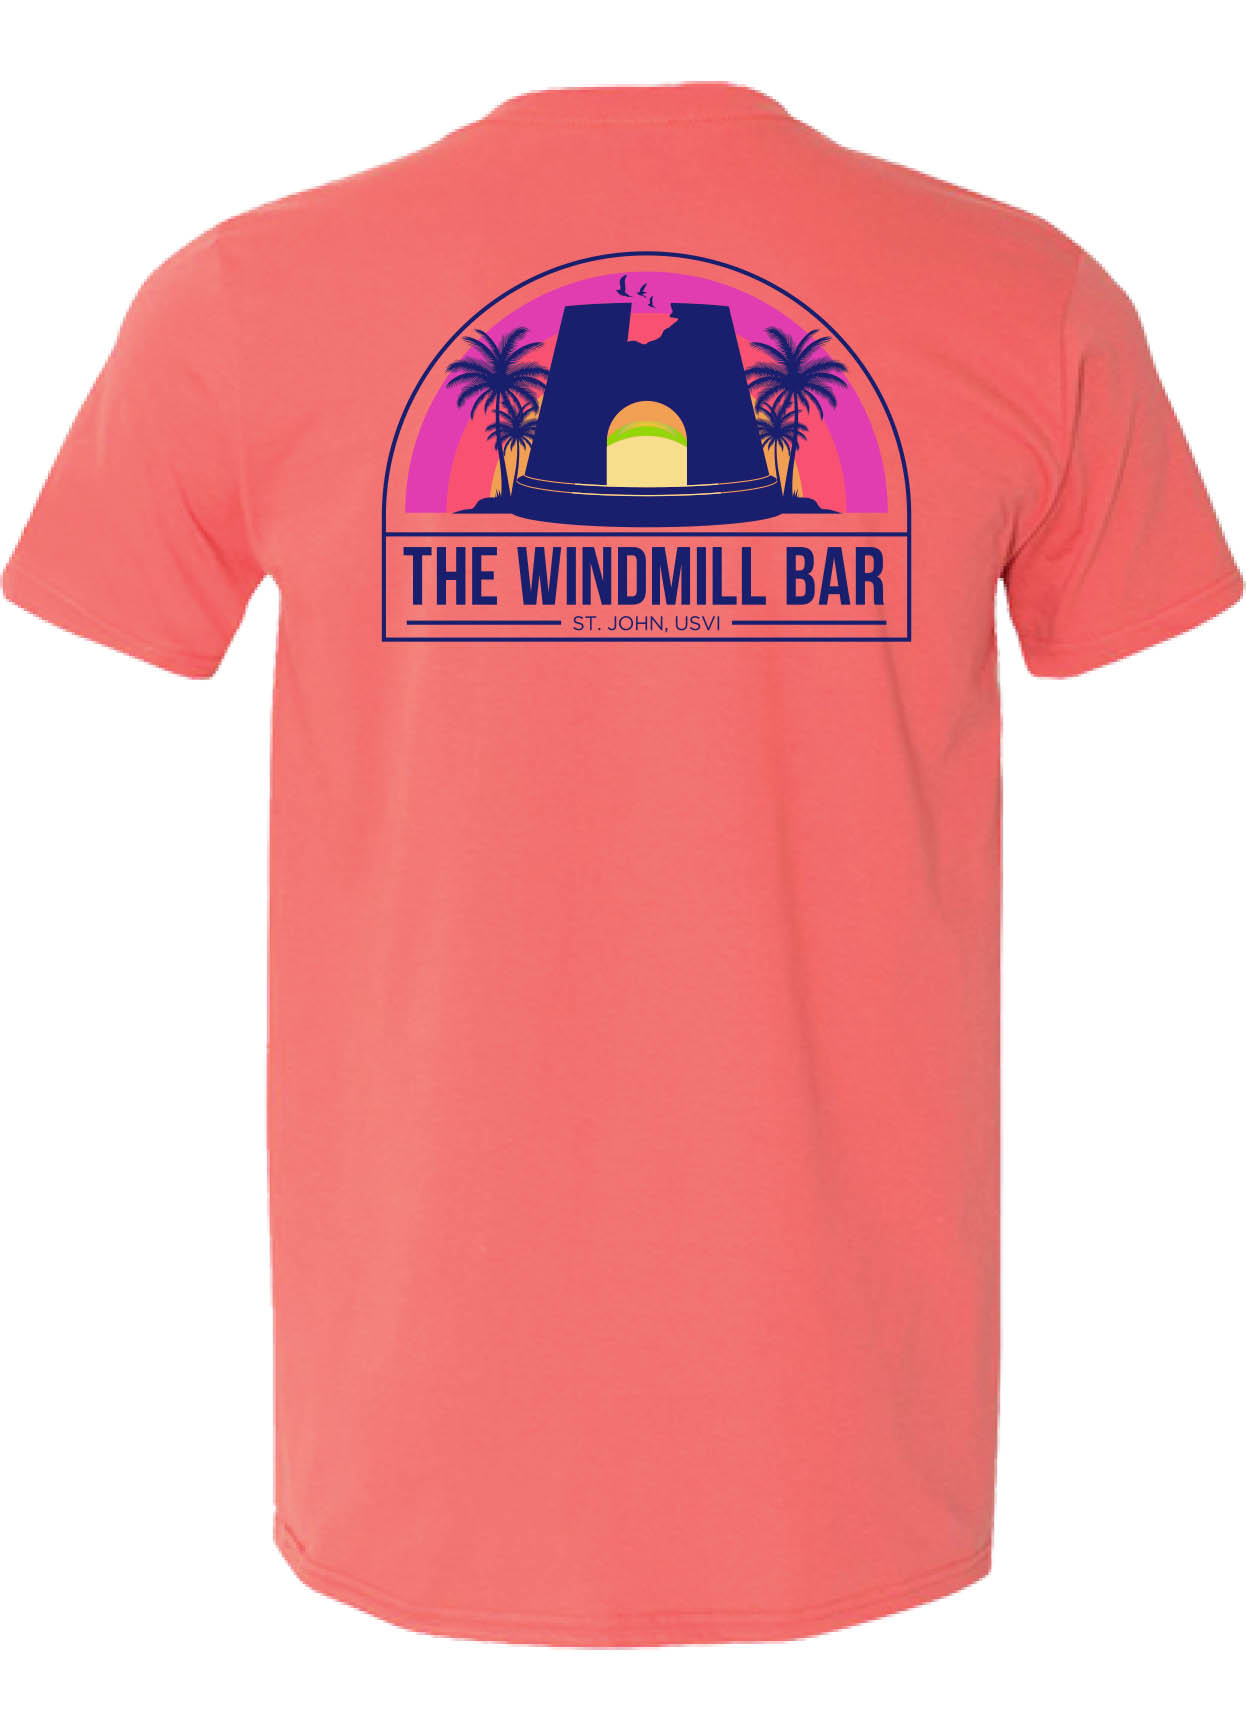 NEW! Windmill Bar Sunset Logo Tee - Coral